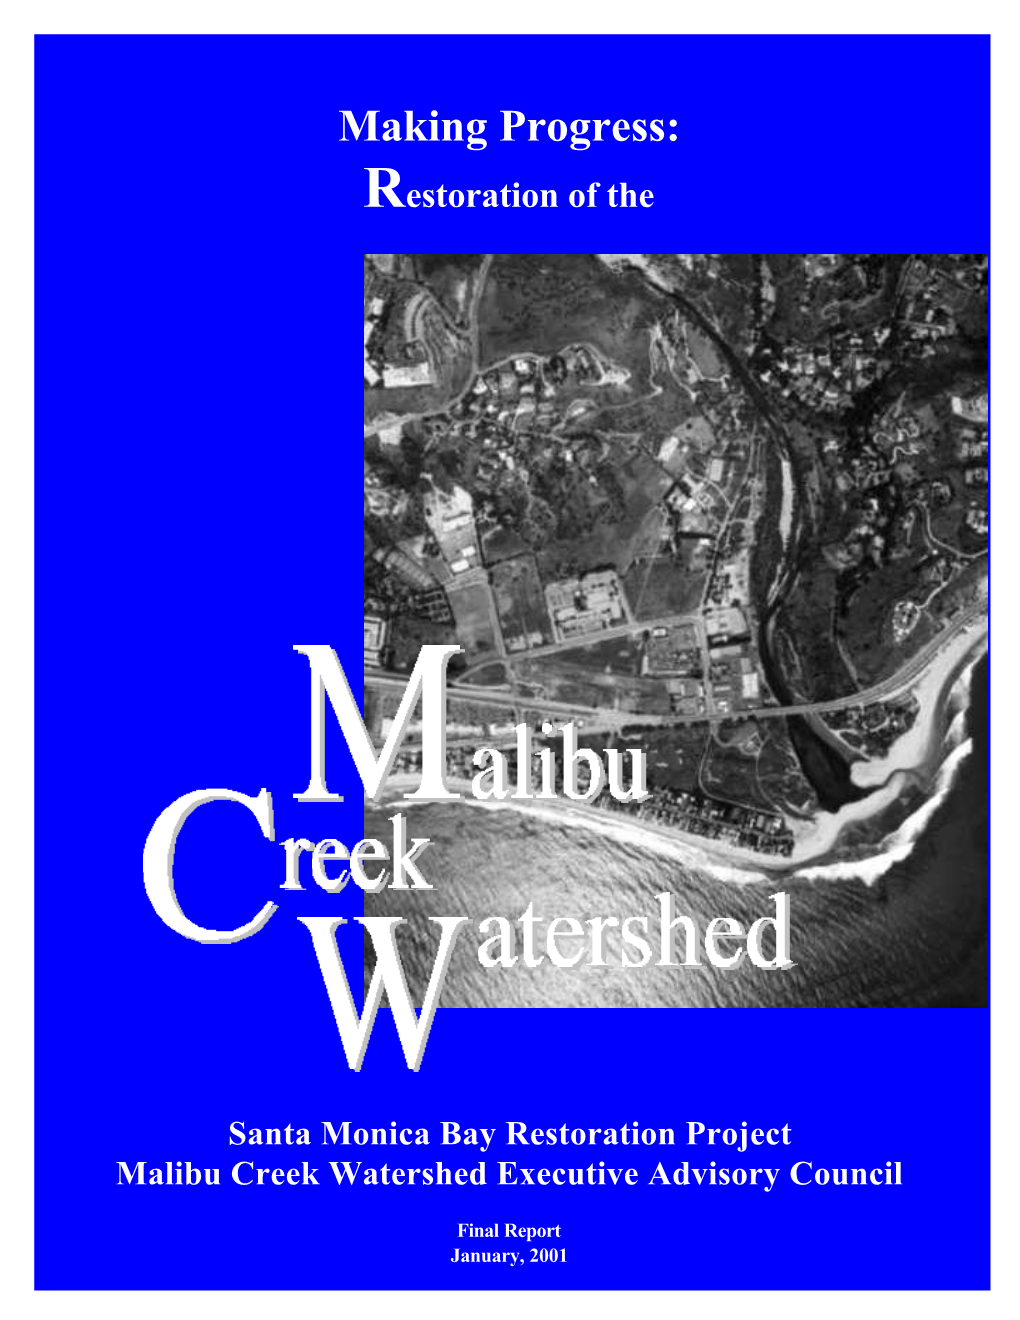 Malibu Creek Watershed Executive Advisory Council